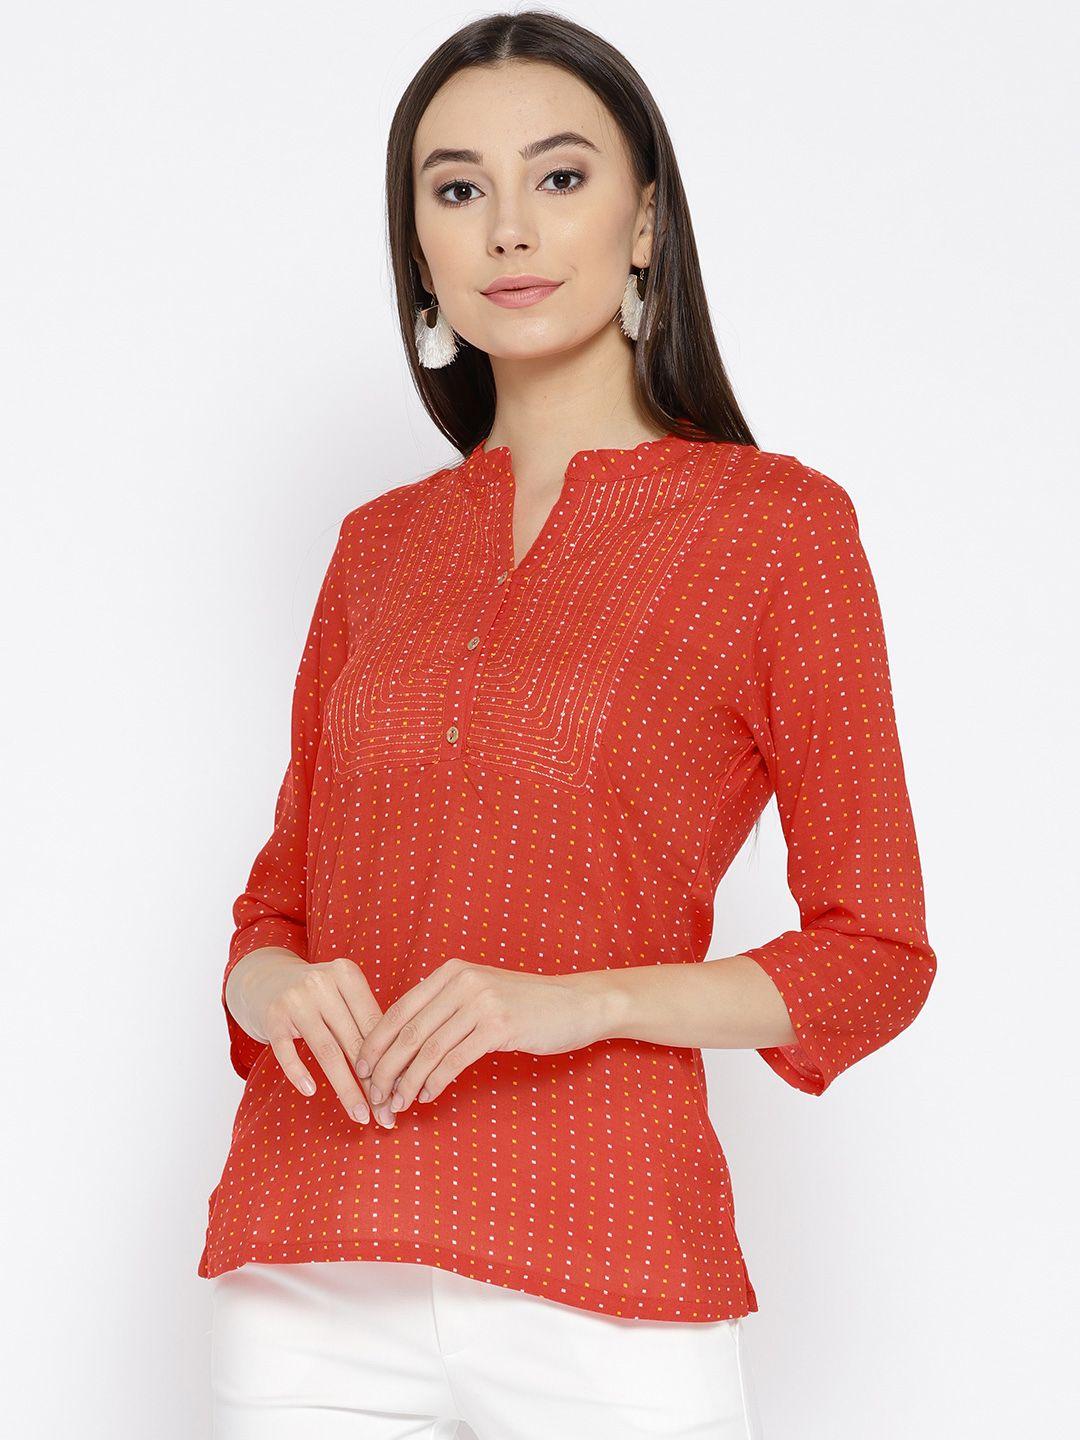 rangriti women orange printed shirt style top